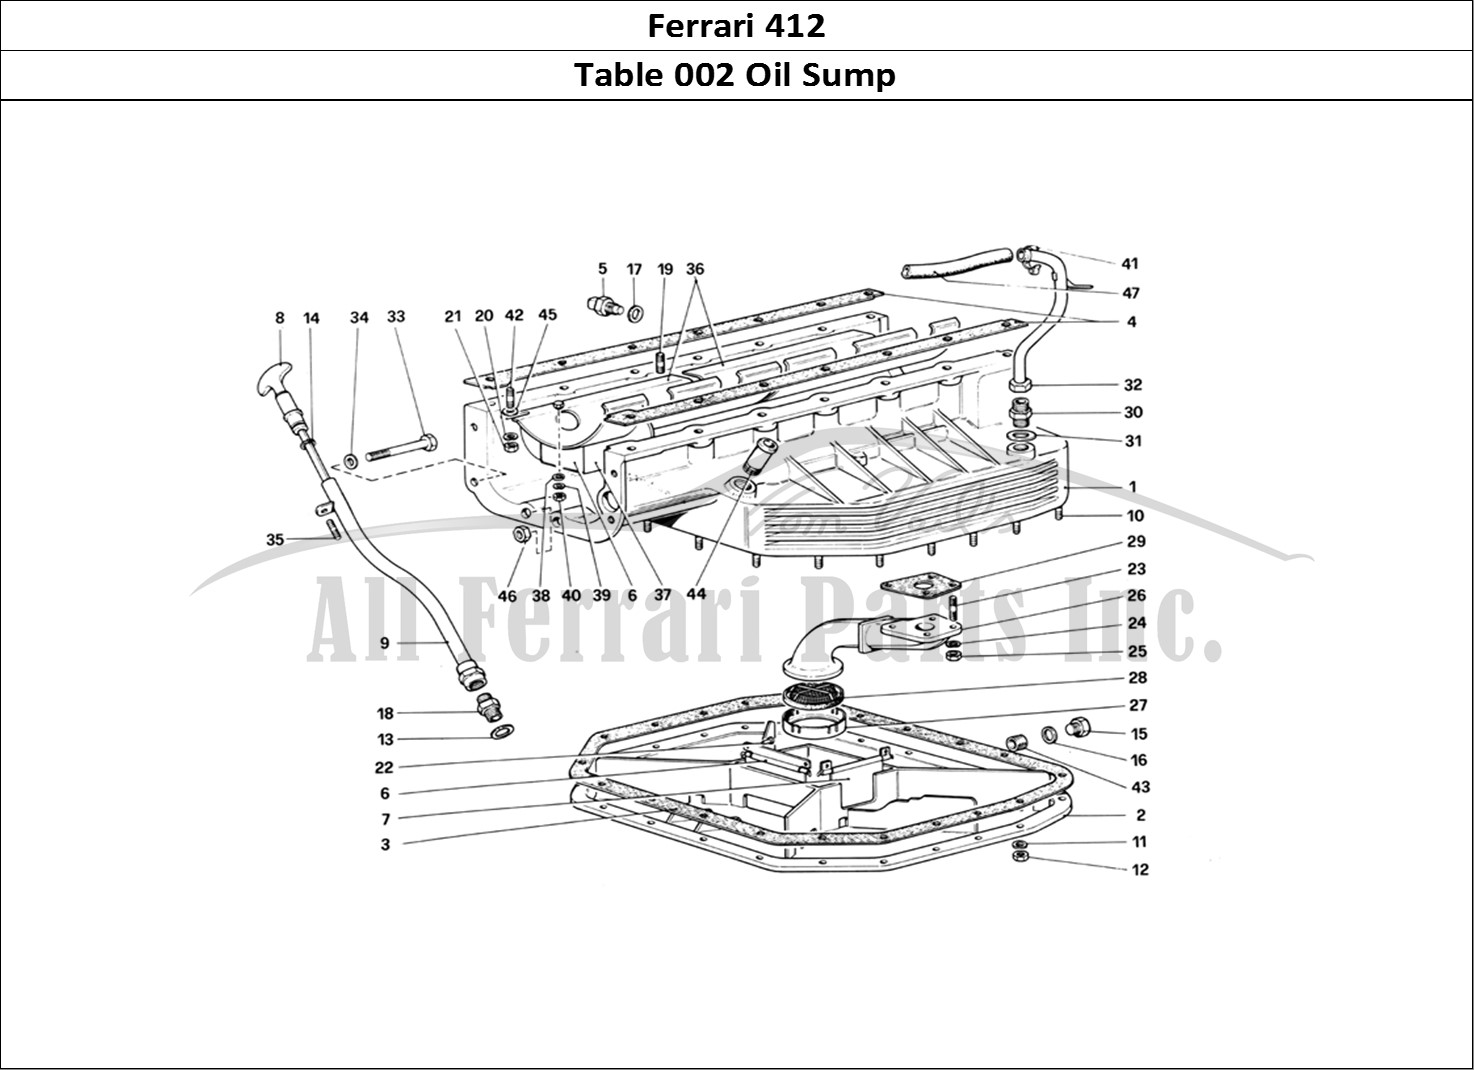 Ferrari Parts Ferrari 412 (Mechanical) Page 002 Oil Sump